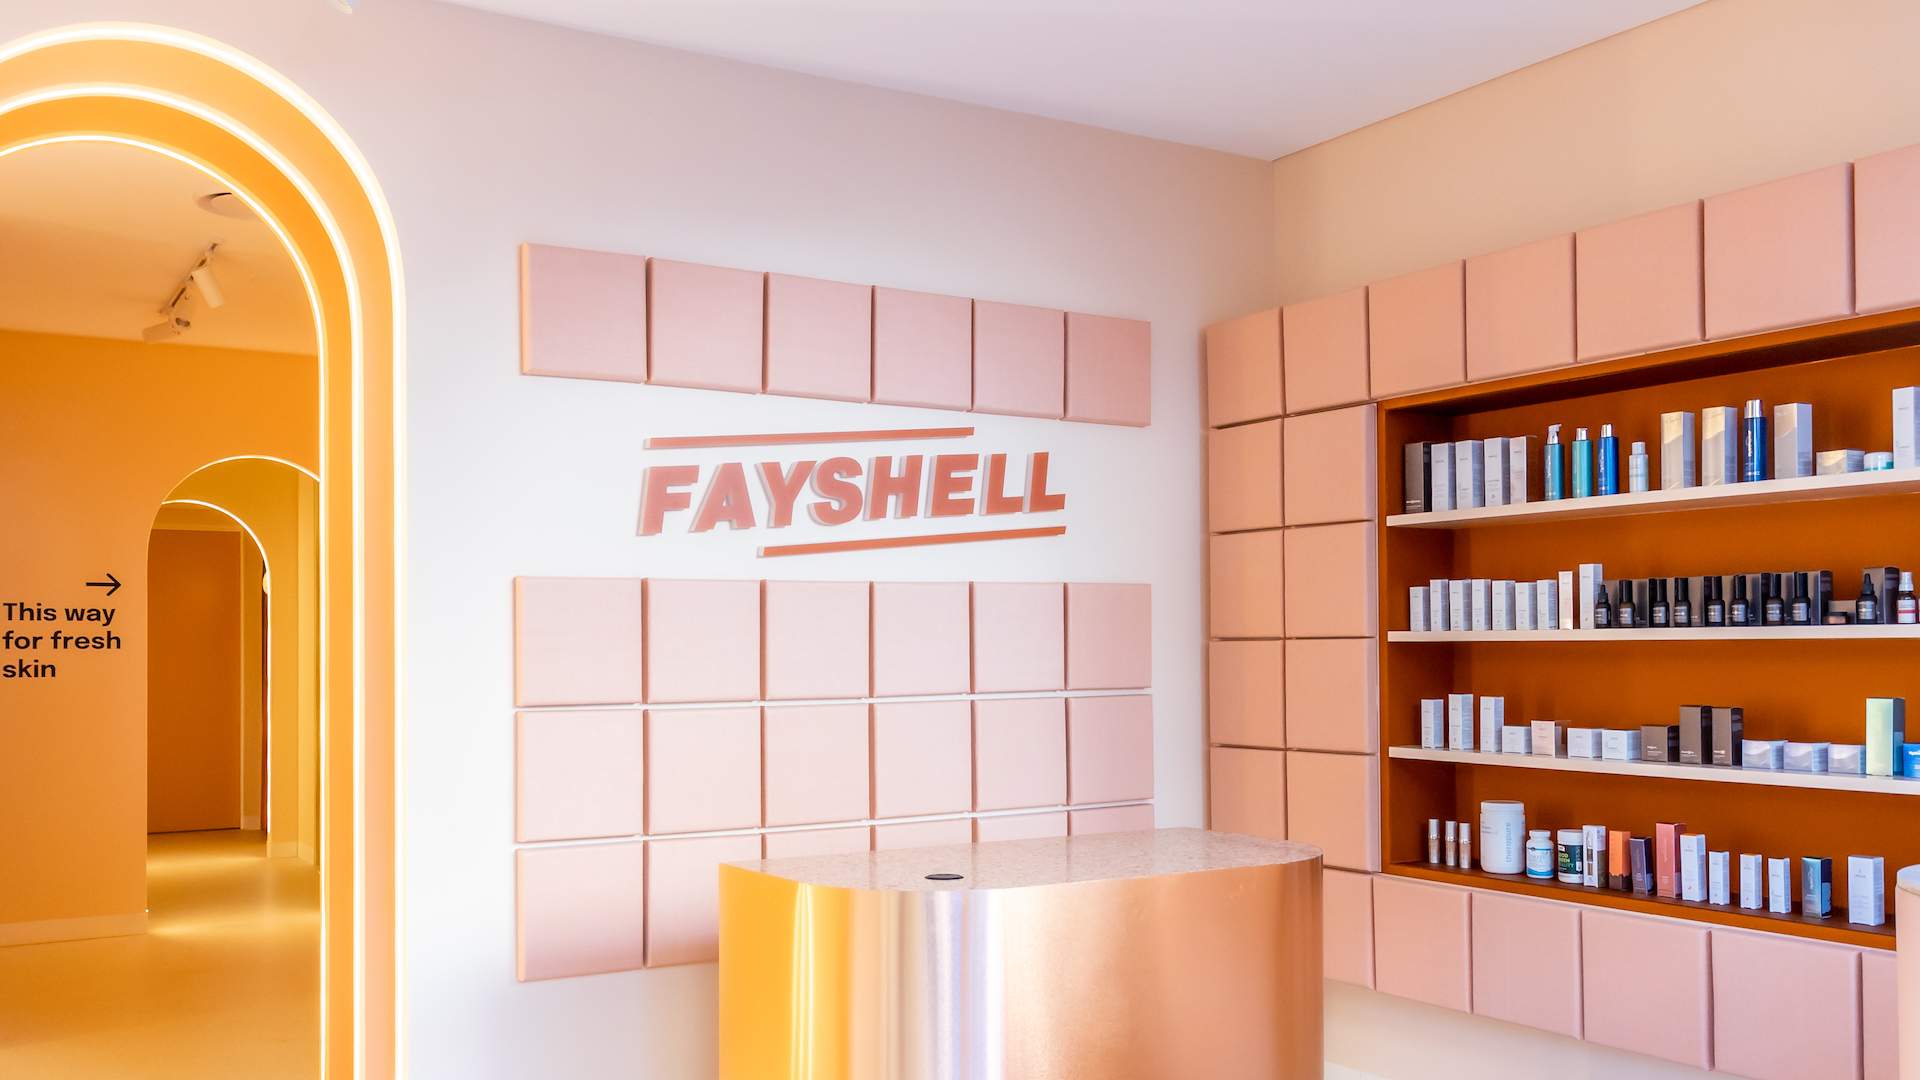 Fayshell